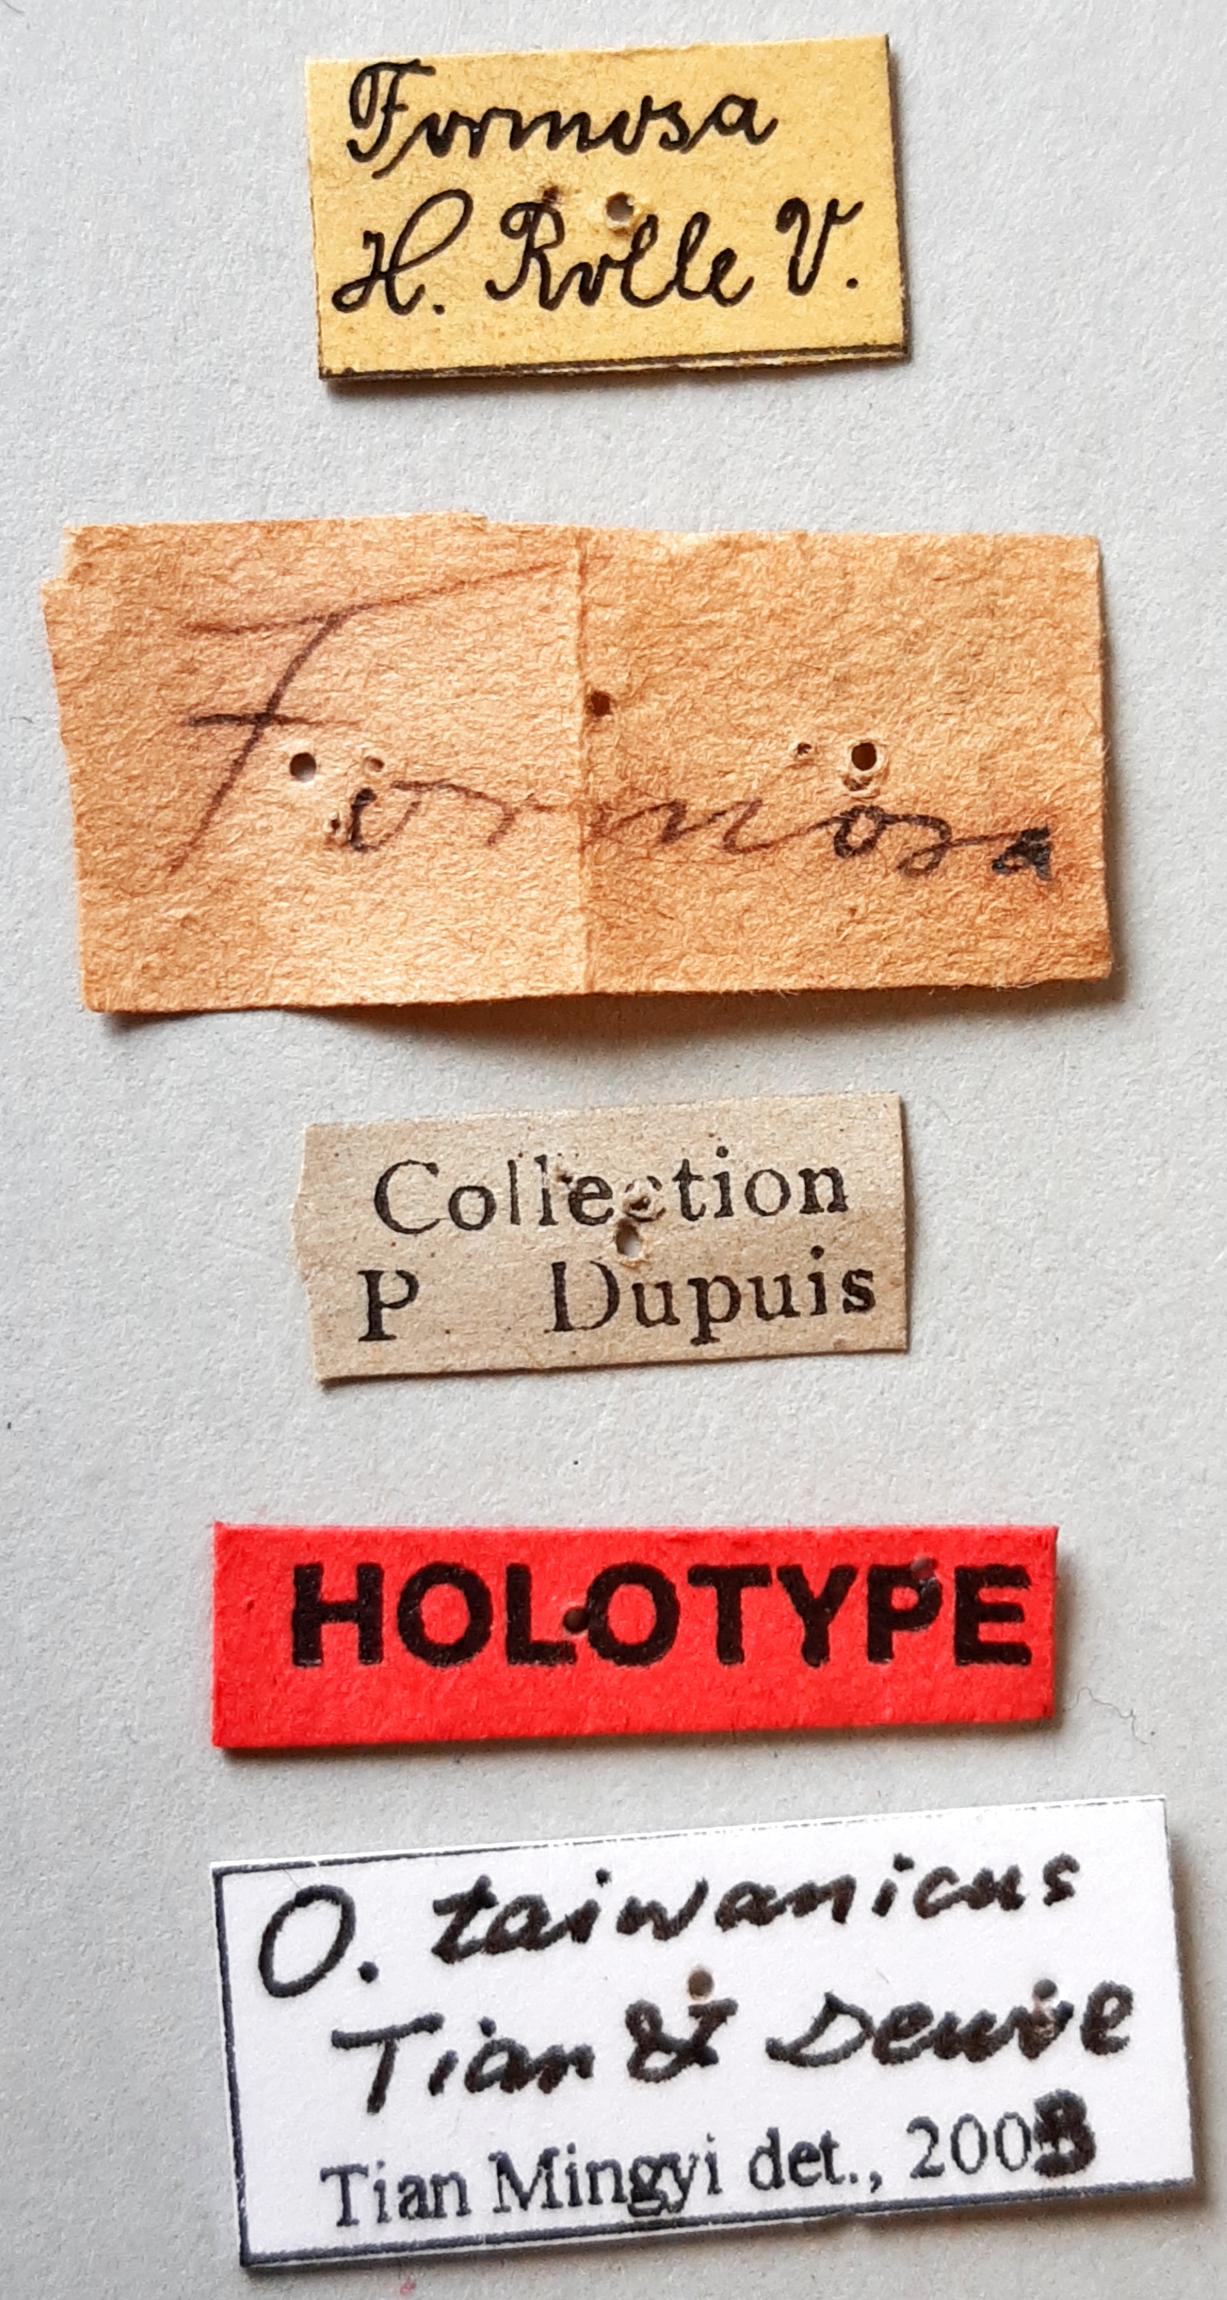 Orthogonius taiwanicus Ht labels